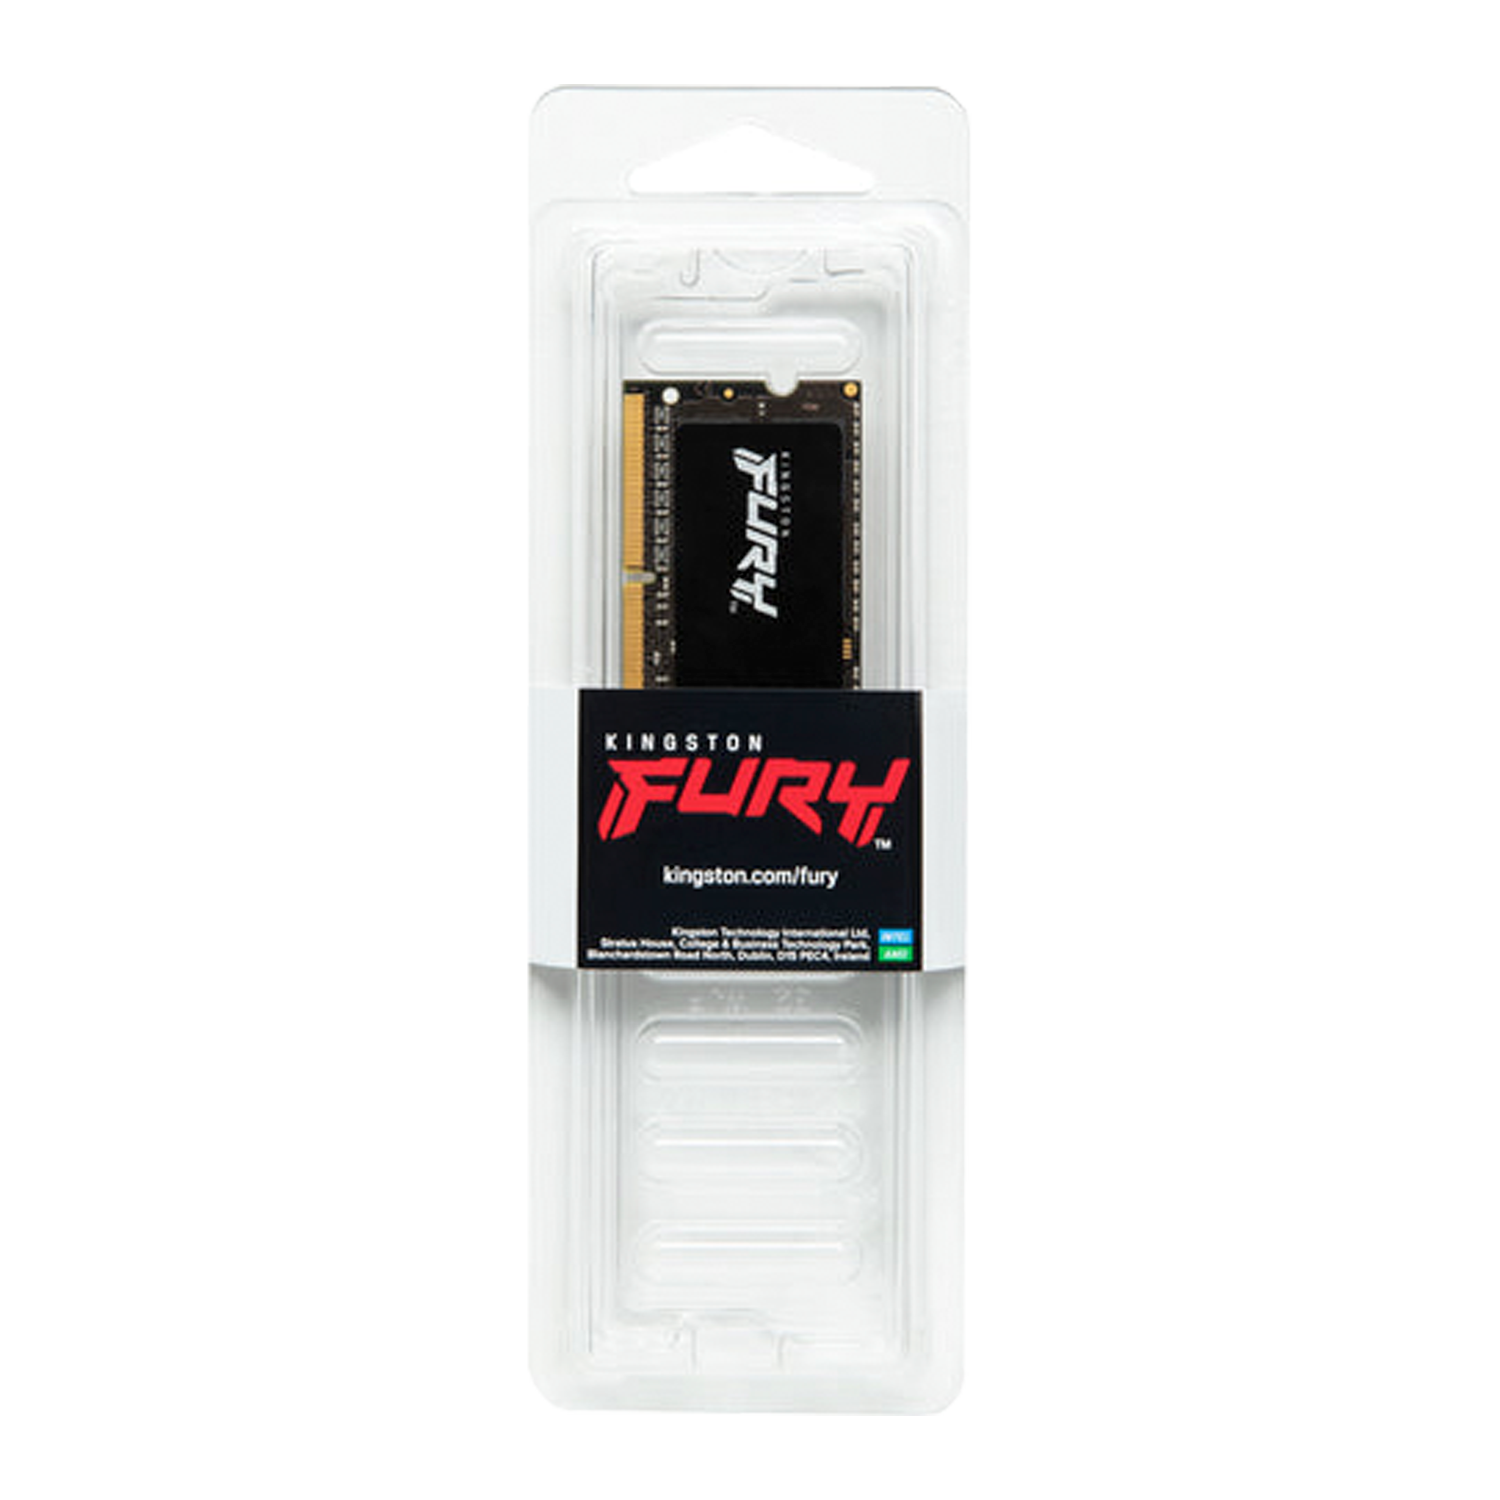 Memória RAM para Notebook Kingston Fury Impact 32GB / DDR4 / 3200Mhz - (KF432S20IB/32)